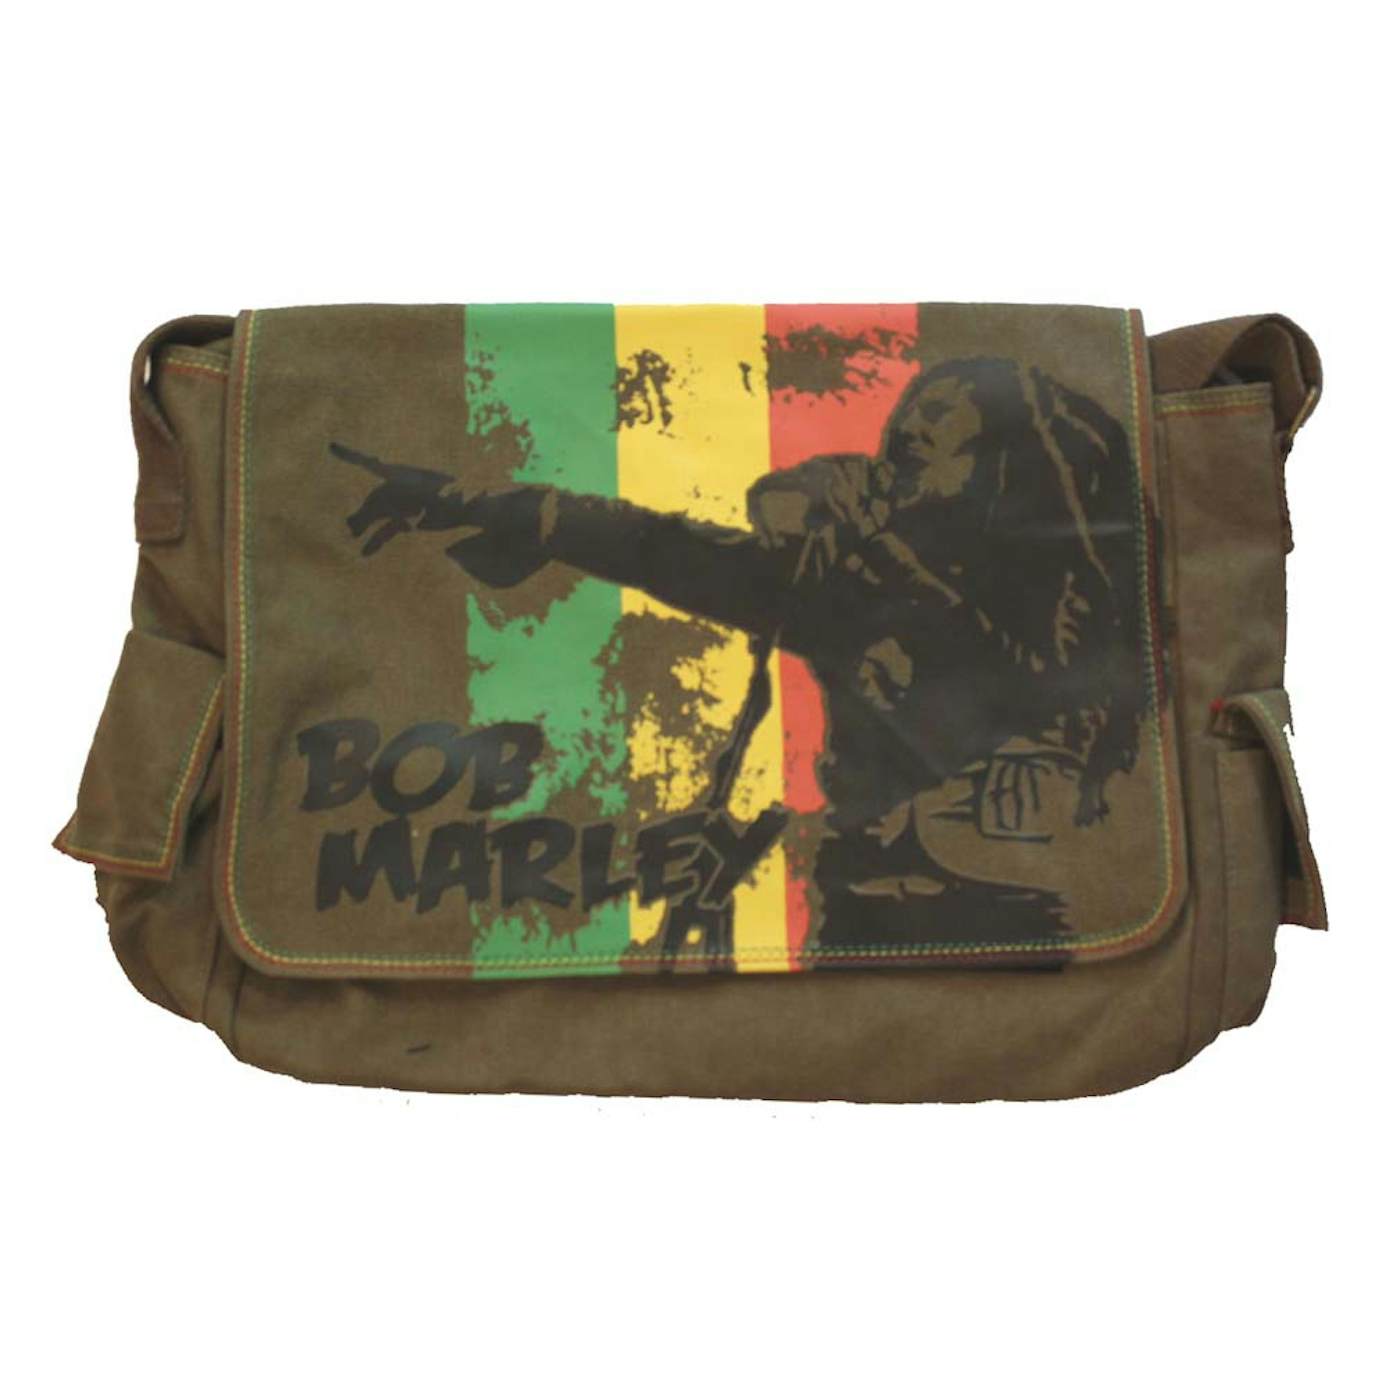 Bob Marley Marley Messenger Bag